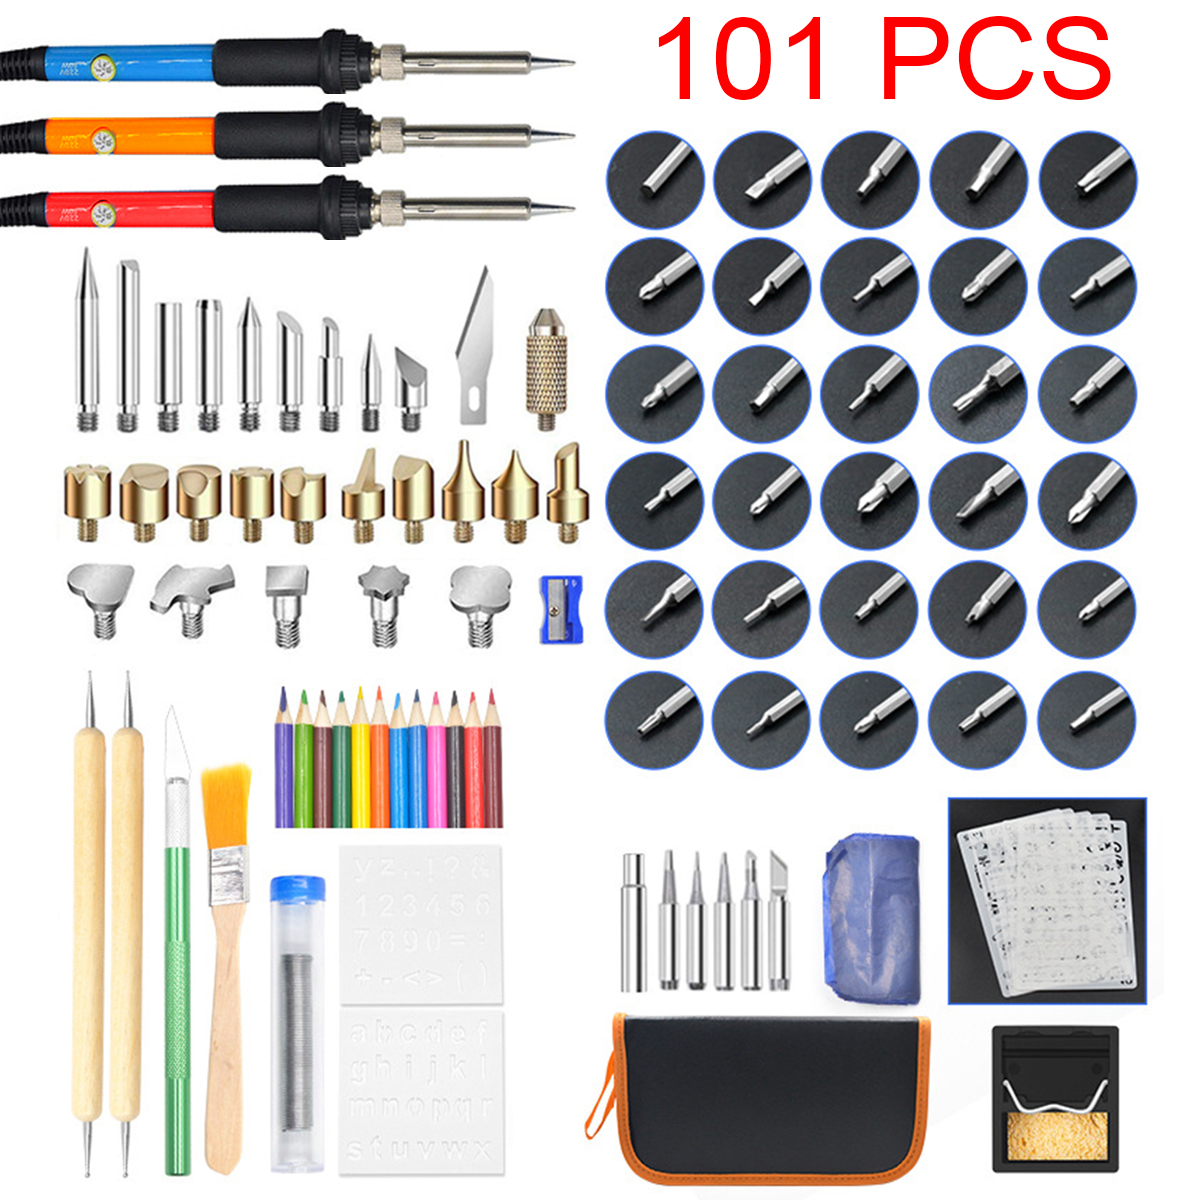 101Pcs-60W-Wood-Burning-Woodworking-Pen-Set-Electric-Soldering-Iron-Burner-Tools-Kit-1626060-1